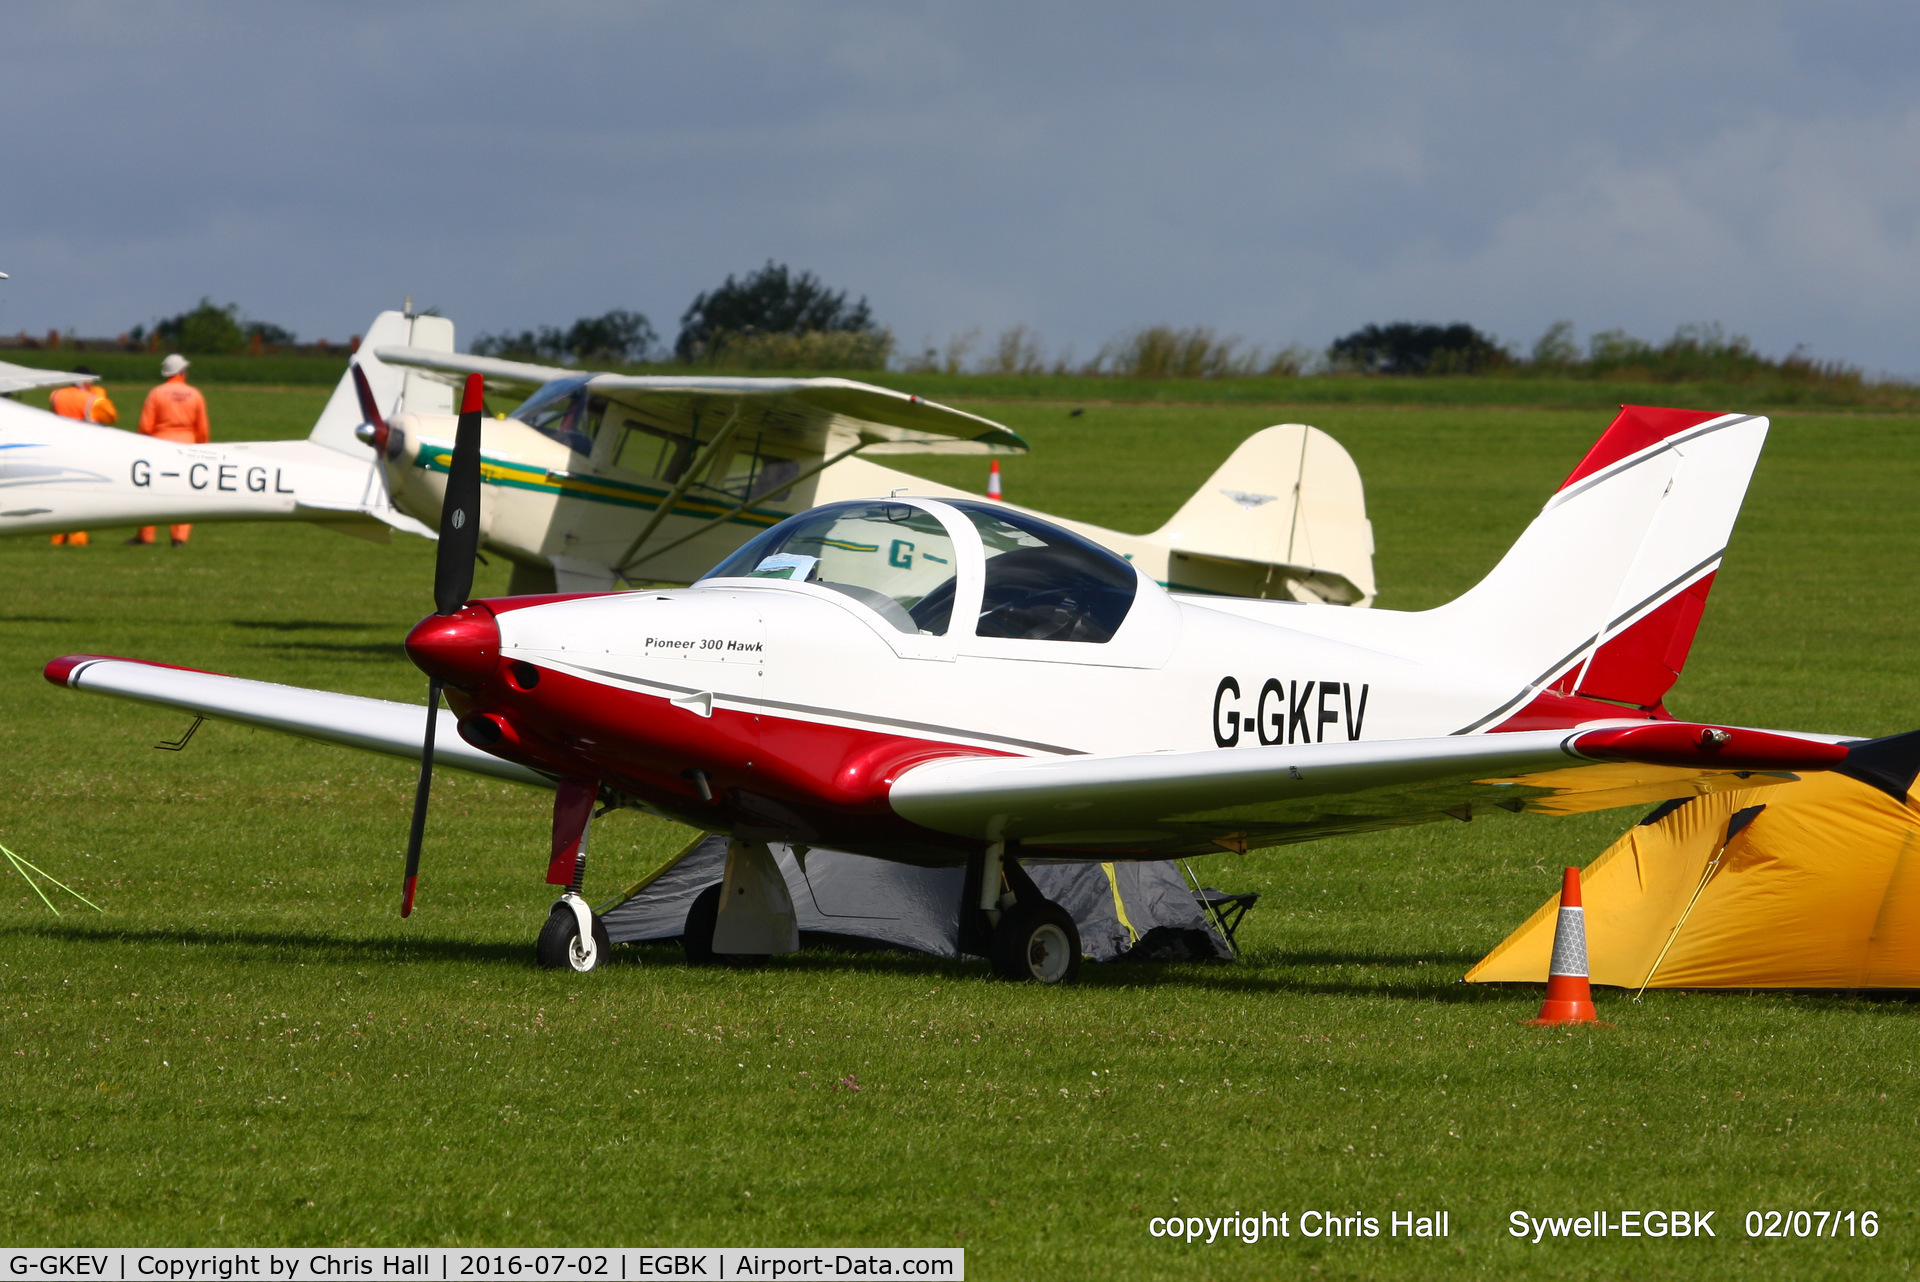 G-GKEV, 2010 Alpi Aviation Pioneer 300 Hawk C/N LAA 330A-14965, at Aeroexpo 2016